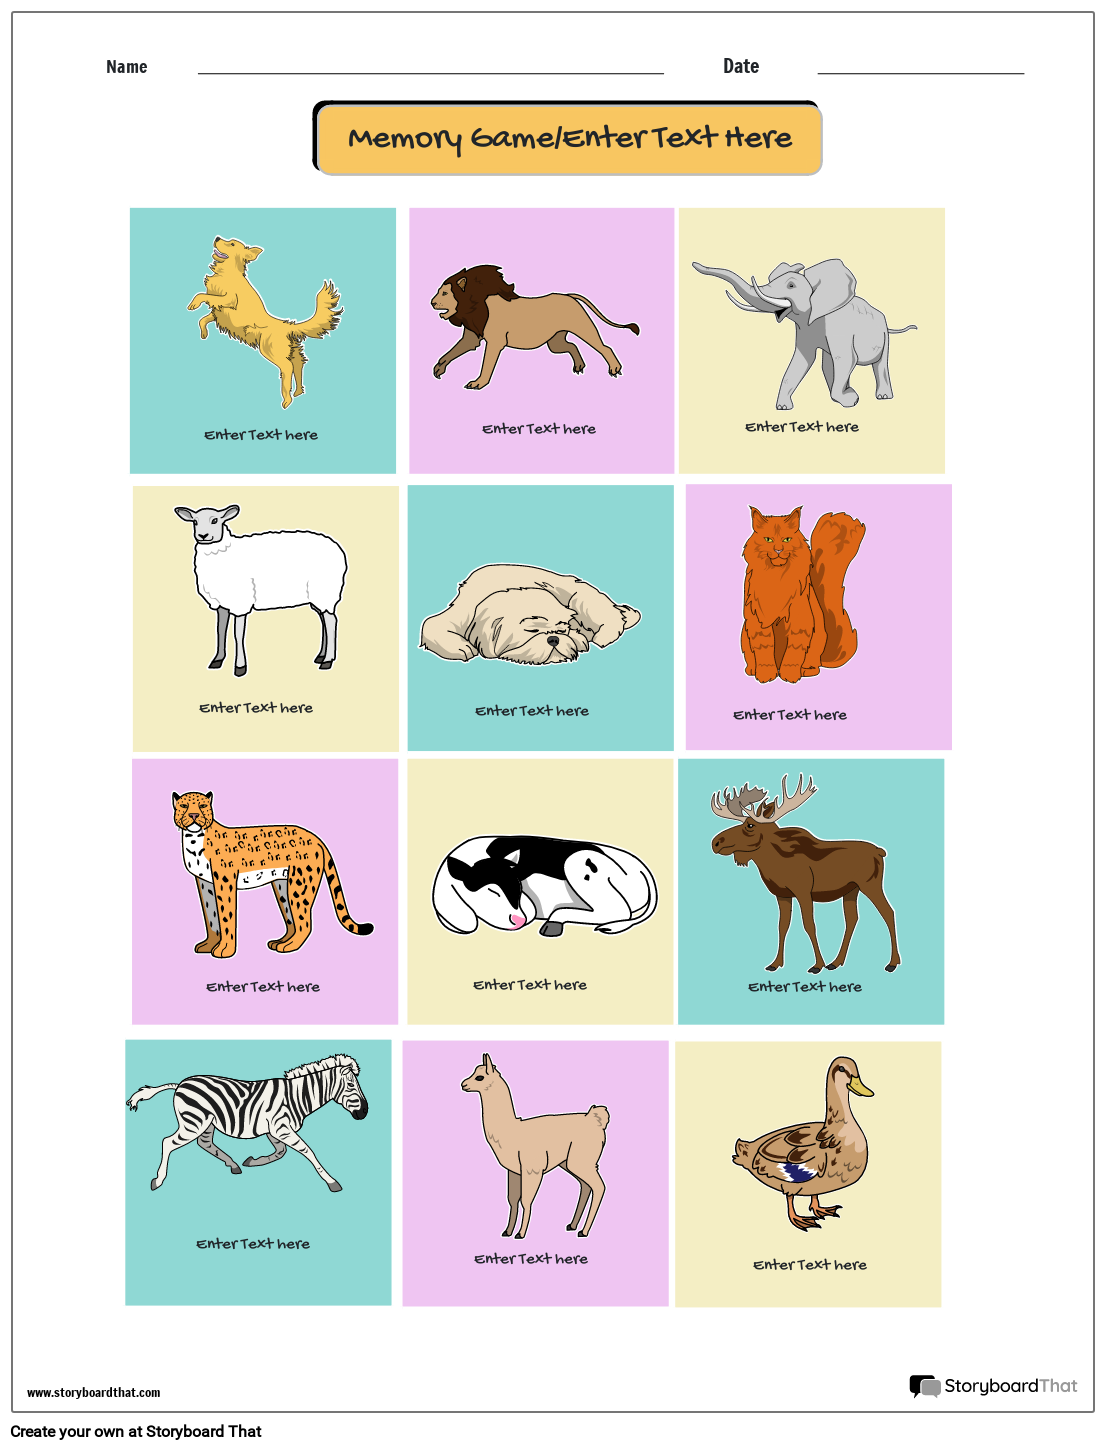 Fun Game Worksheet with Multiple Animal Drawings